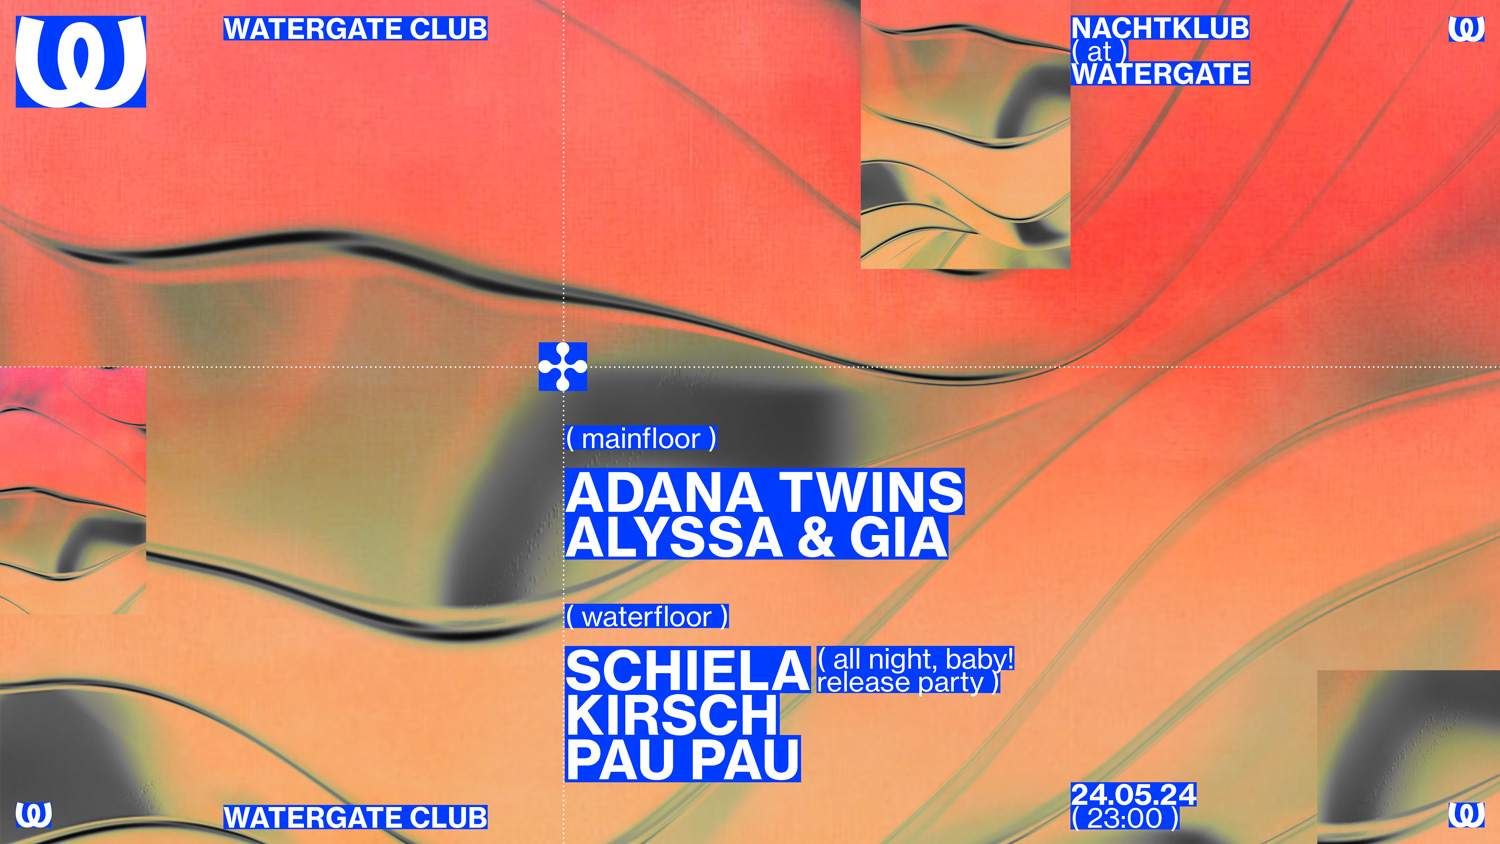 Nachtklub: Adana Twins, Alyssa & Gia, Schiela, KIRSCH, PAU PAU - フライヤー表